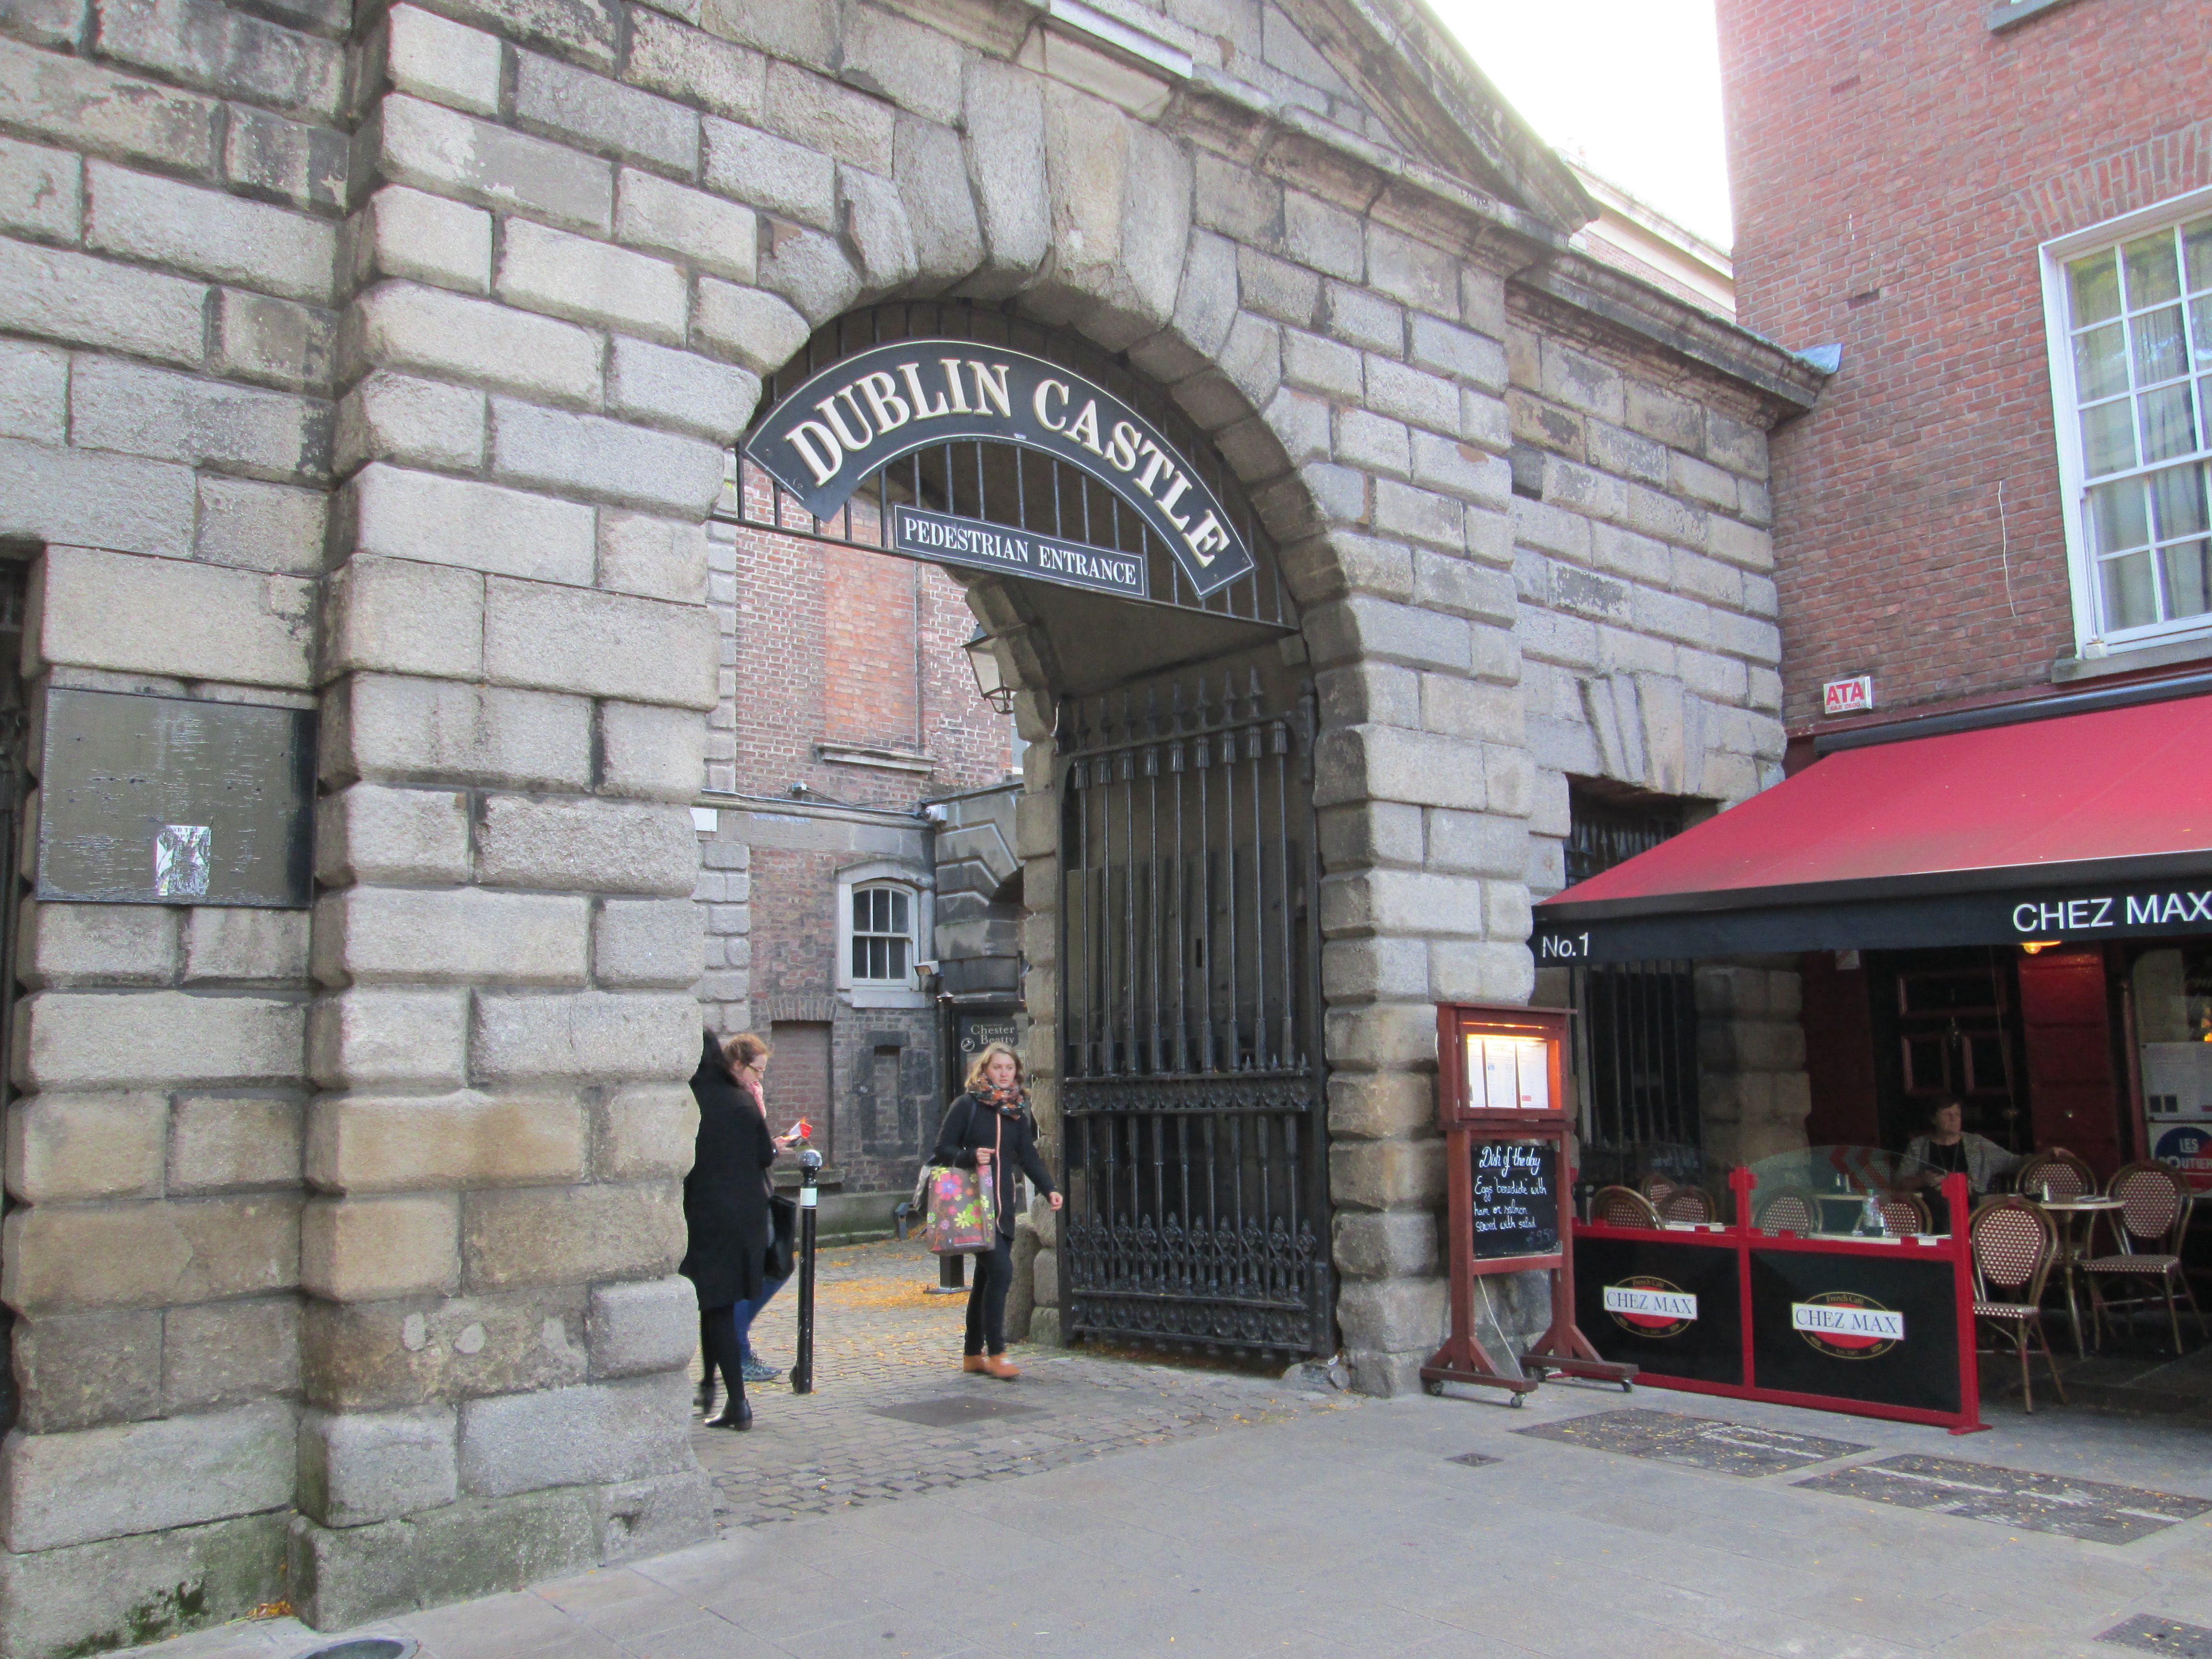 7 passeios culturais imperdívies em Dublin na Irlanda - Dublin Castle 